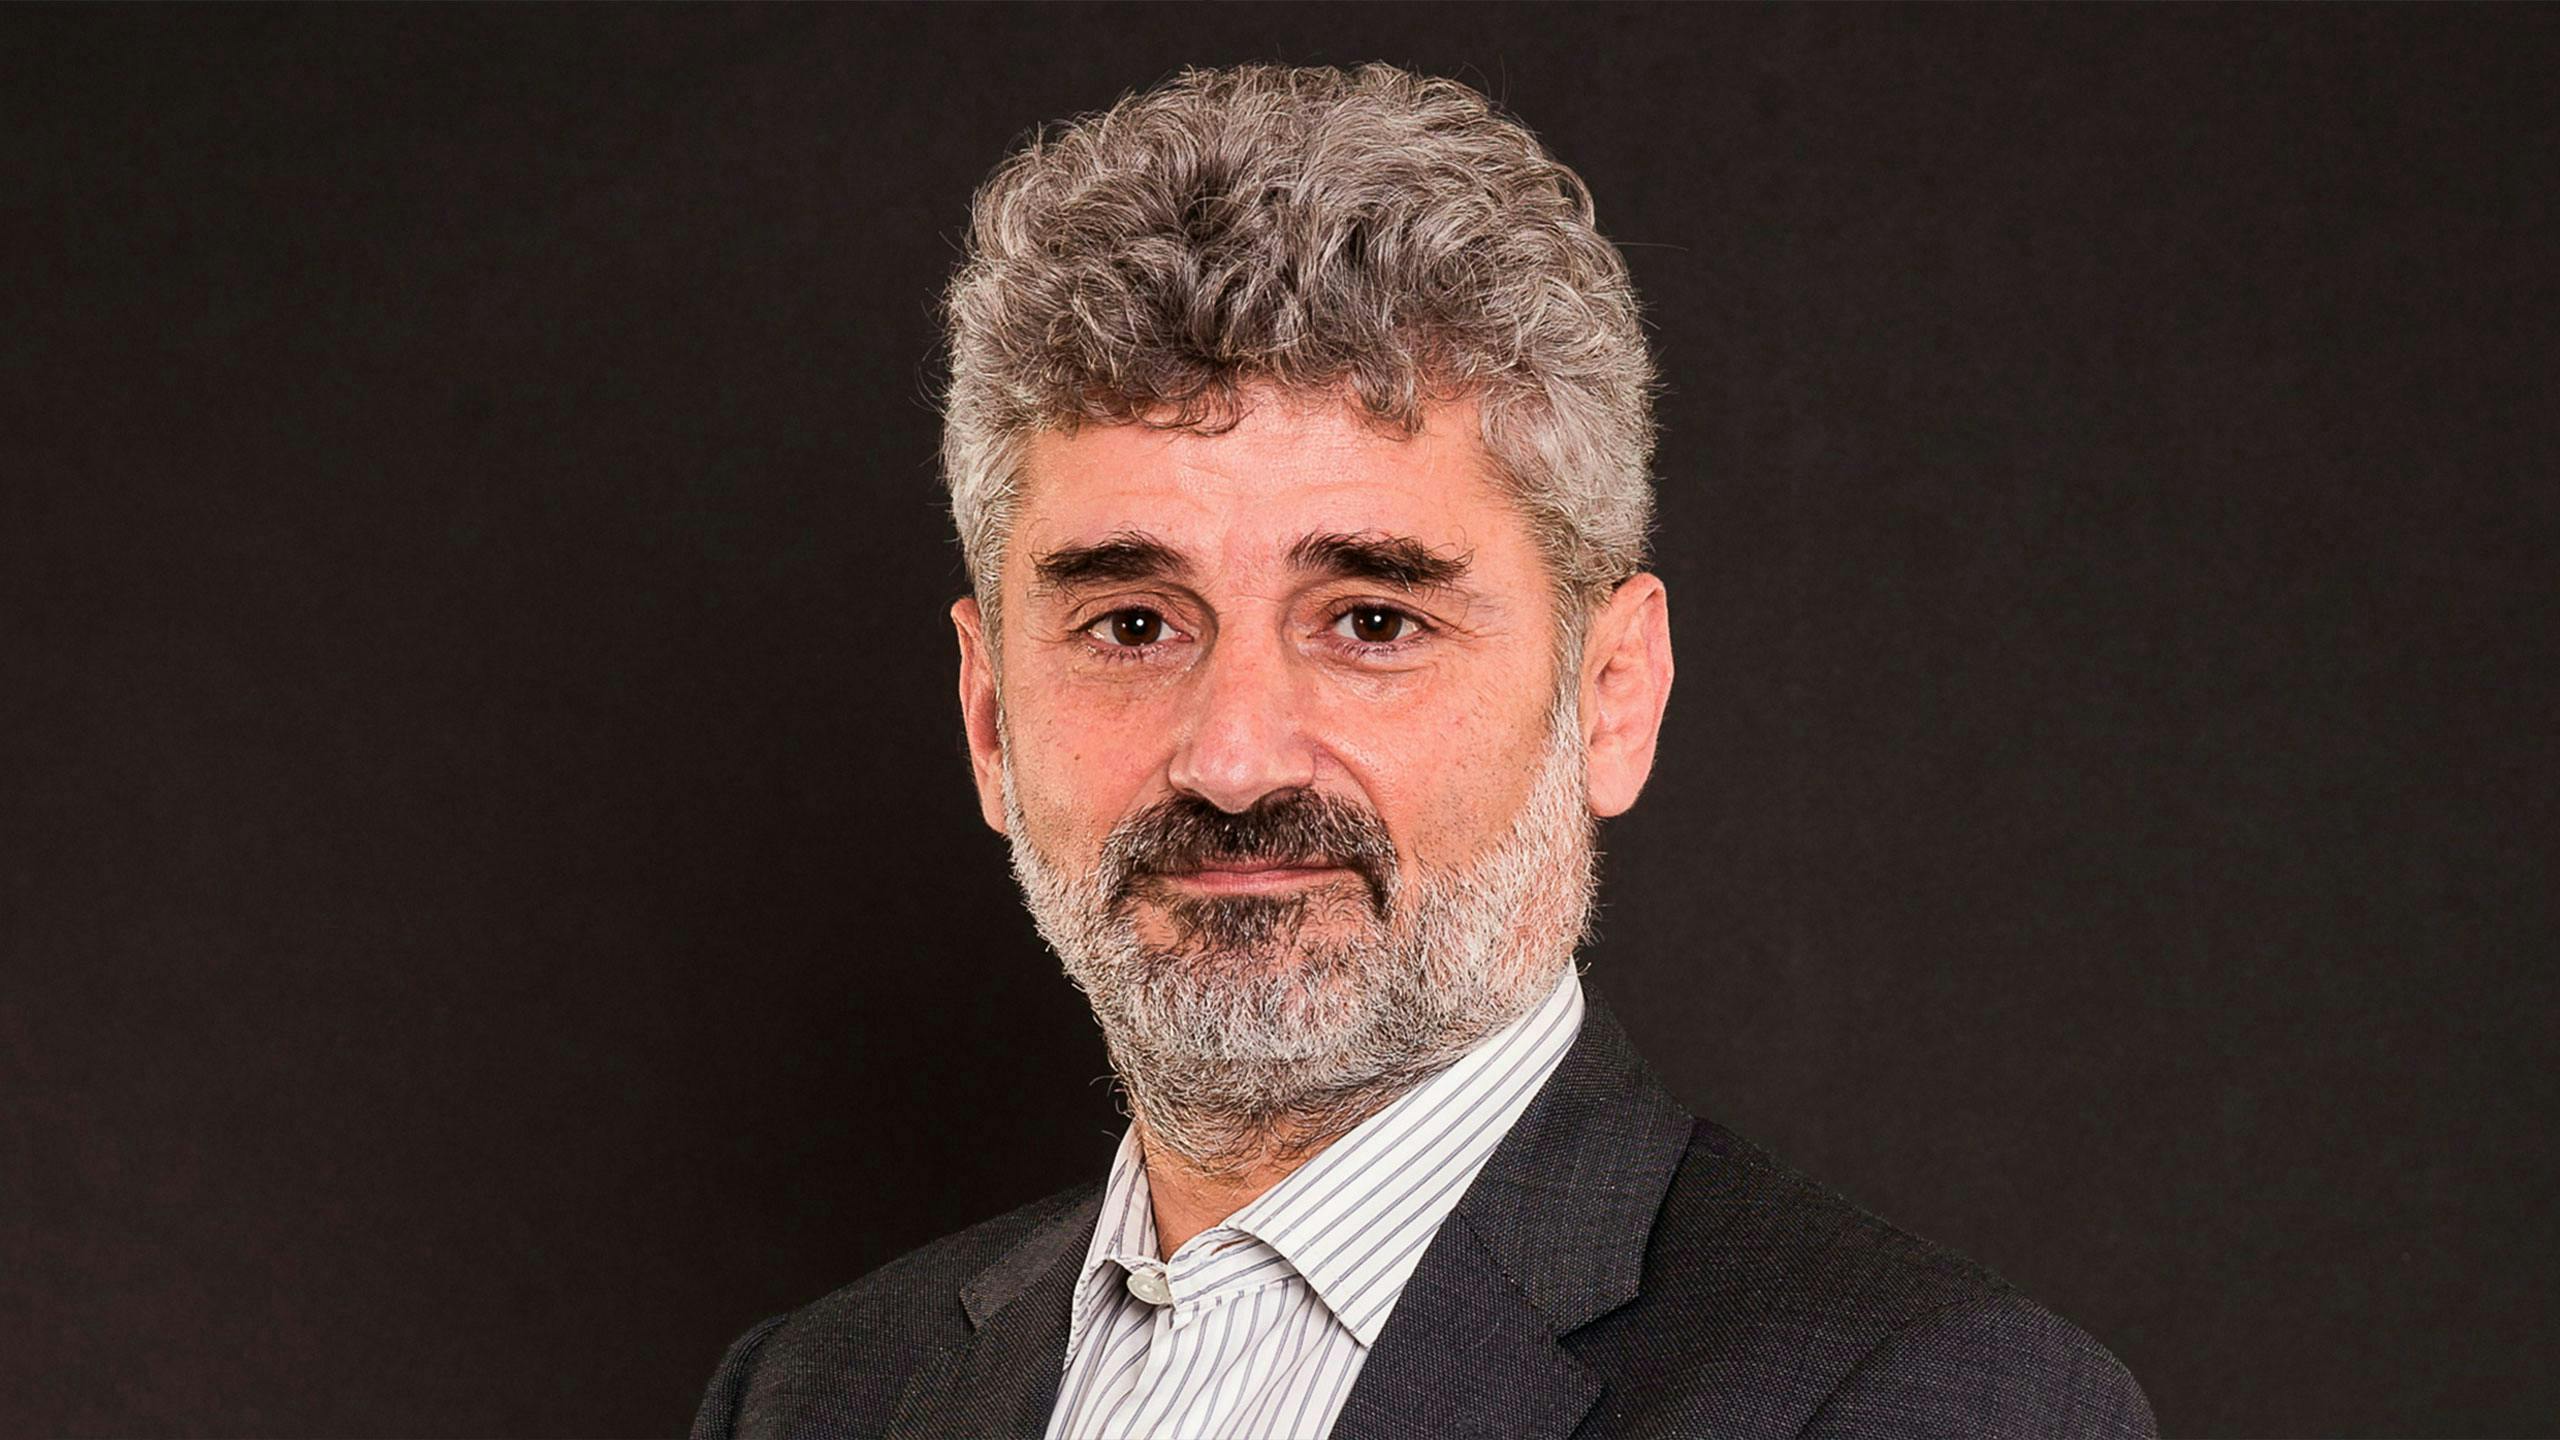 Industry veteran Julián Arrillaga Costa is the new CEO of Principle Power